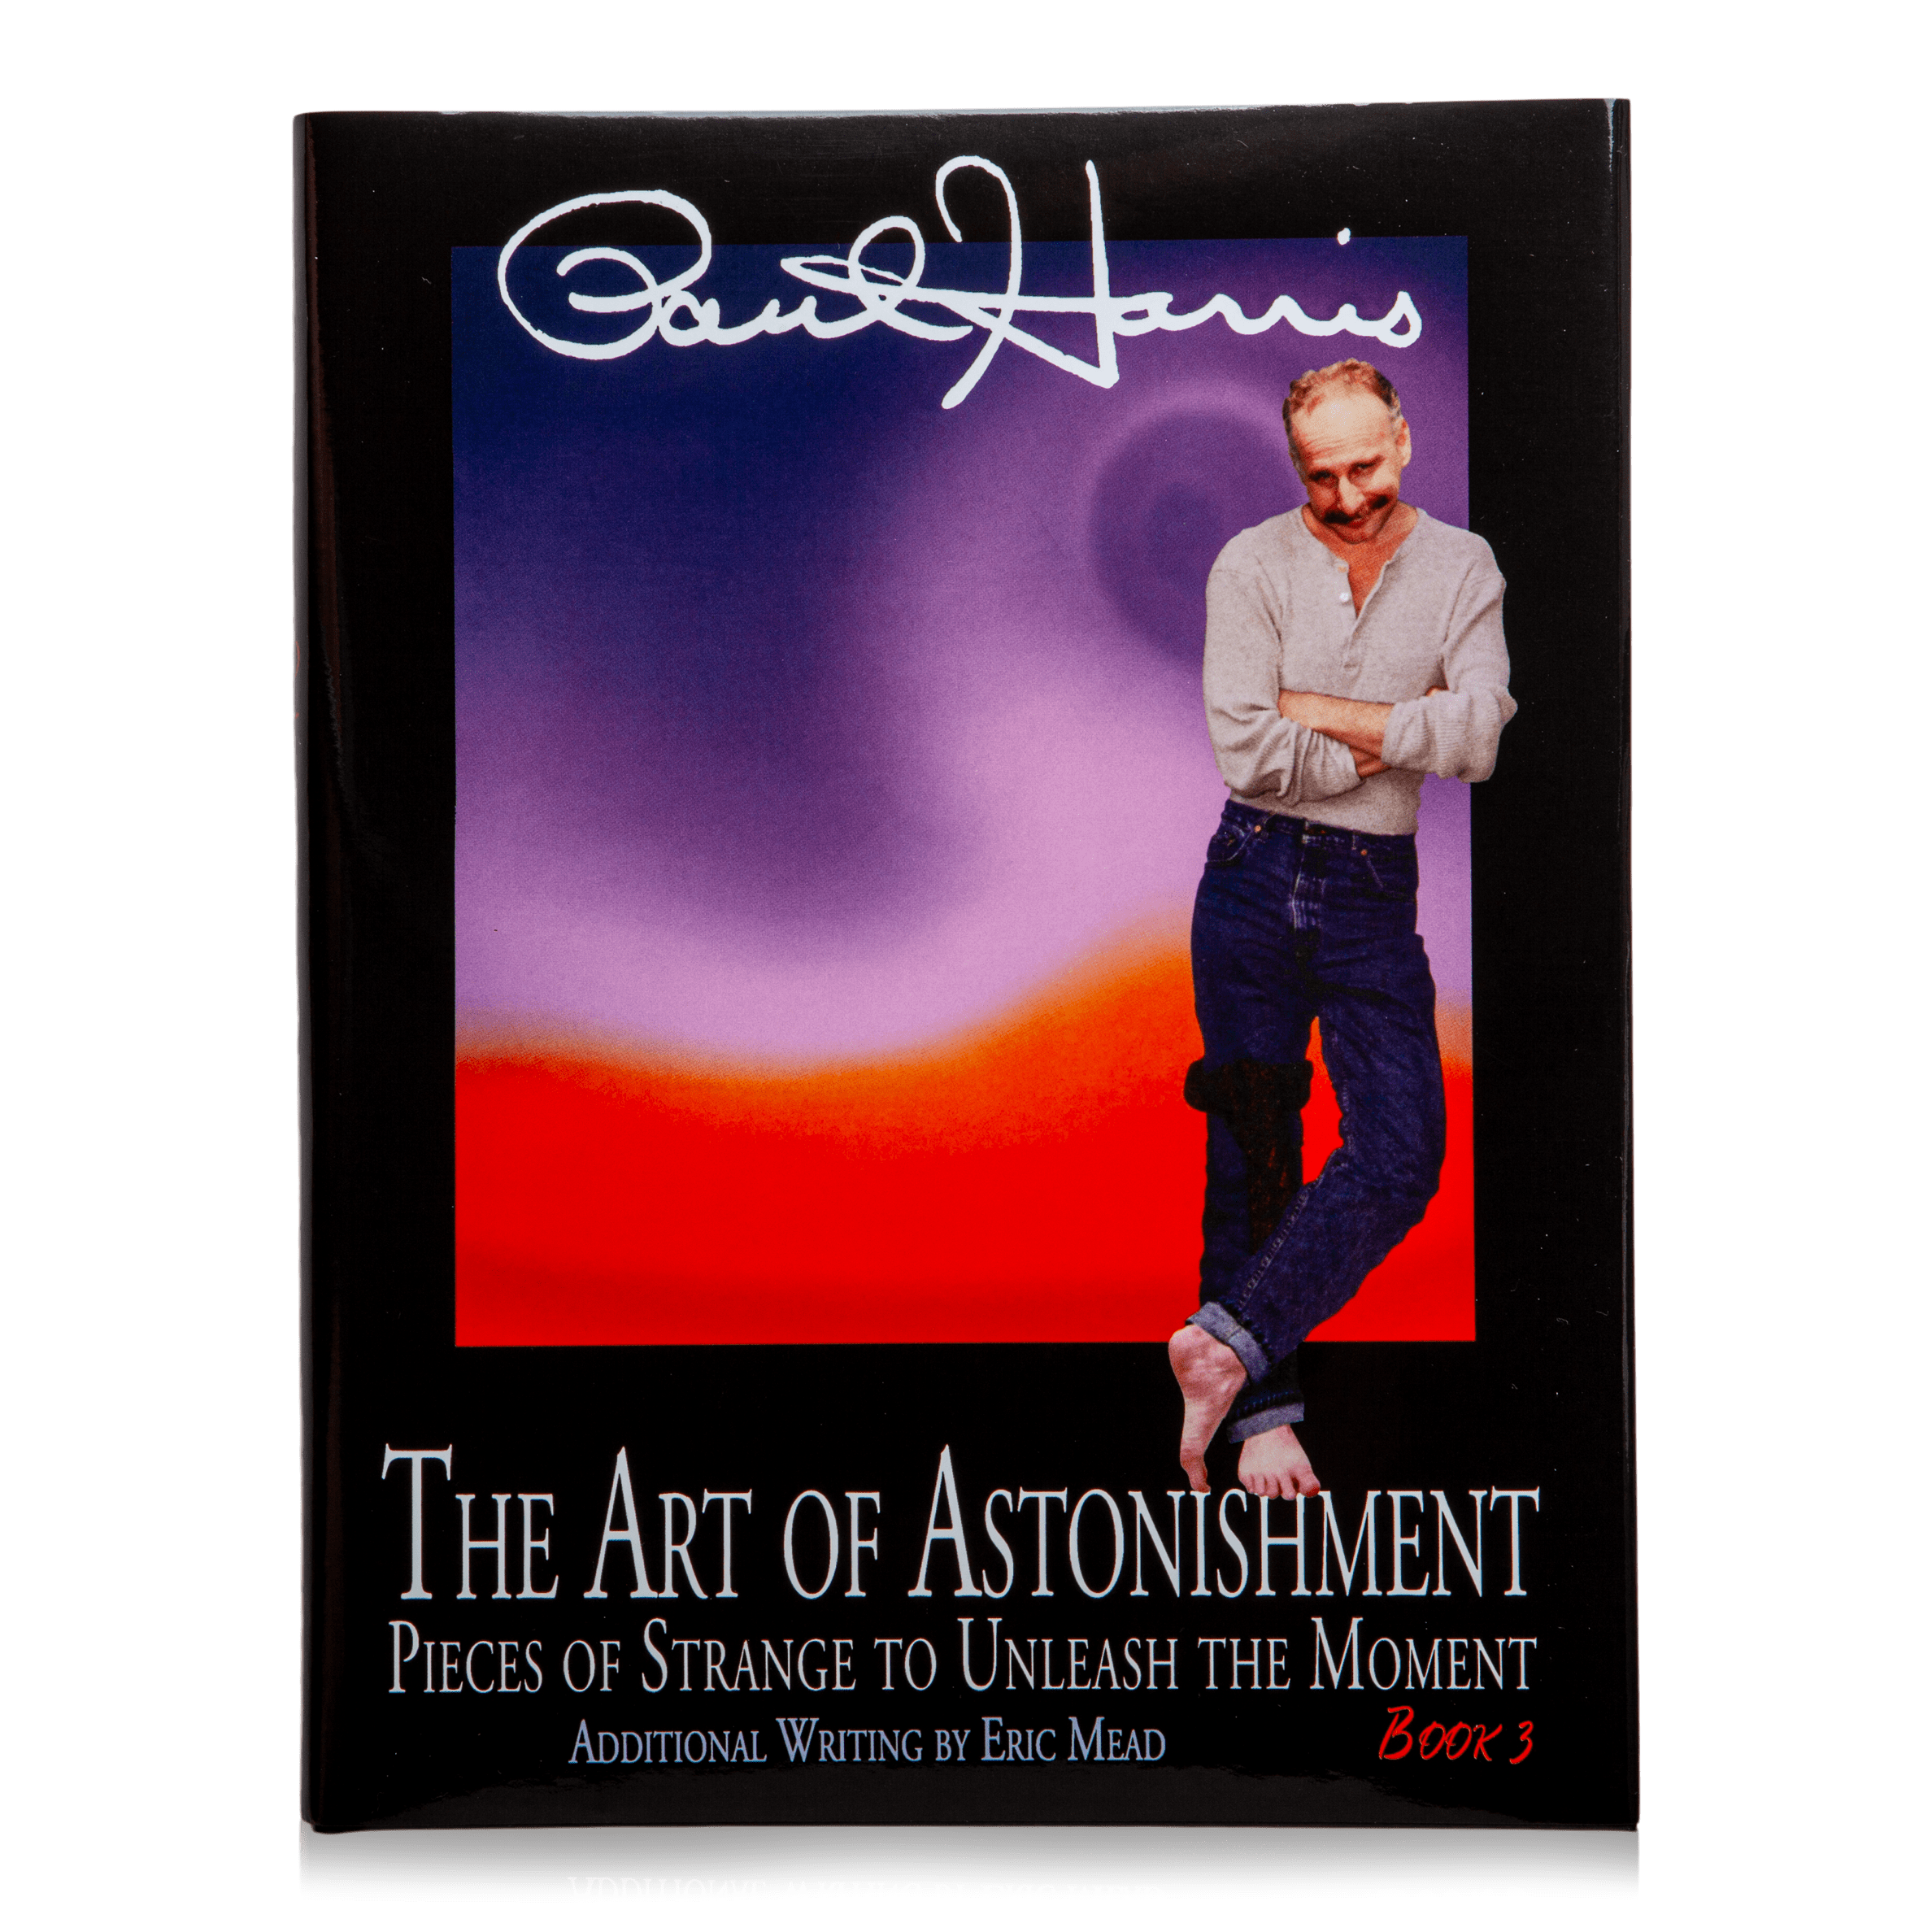 The Art of Astonishment by Paul Harris